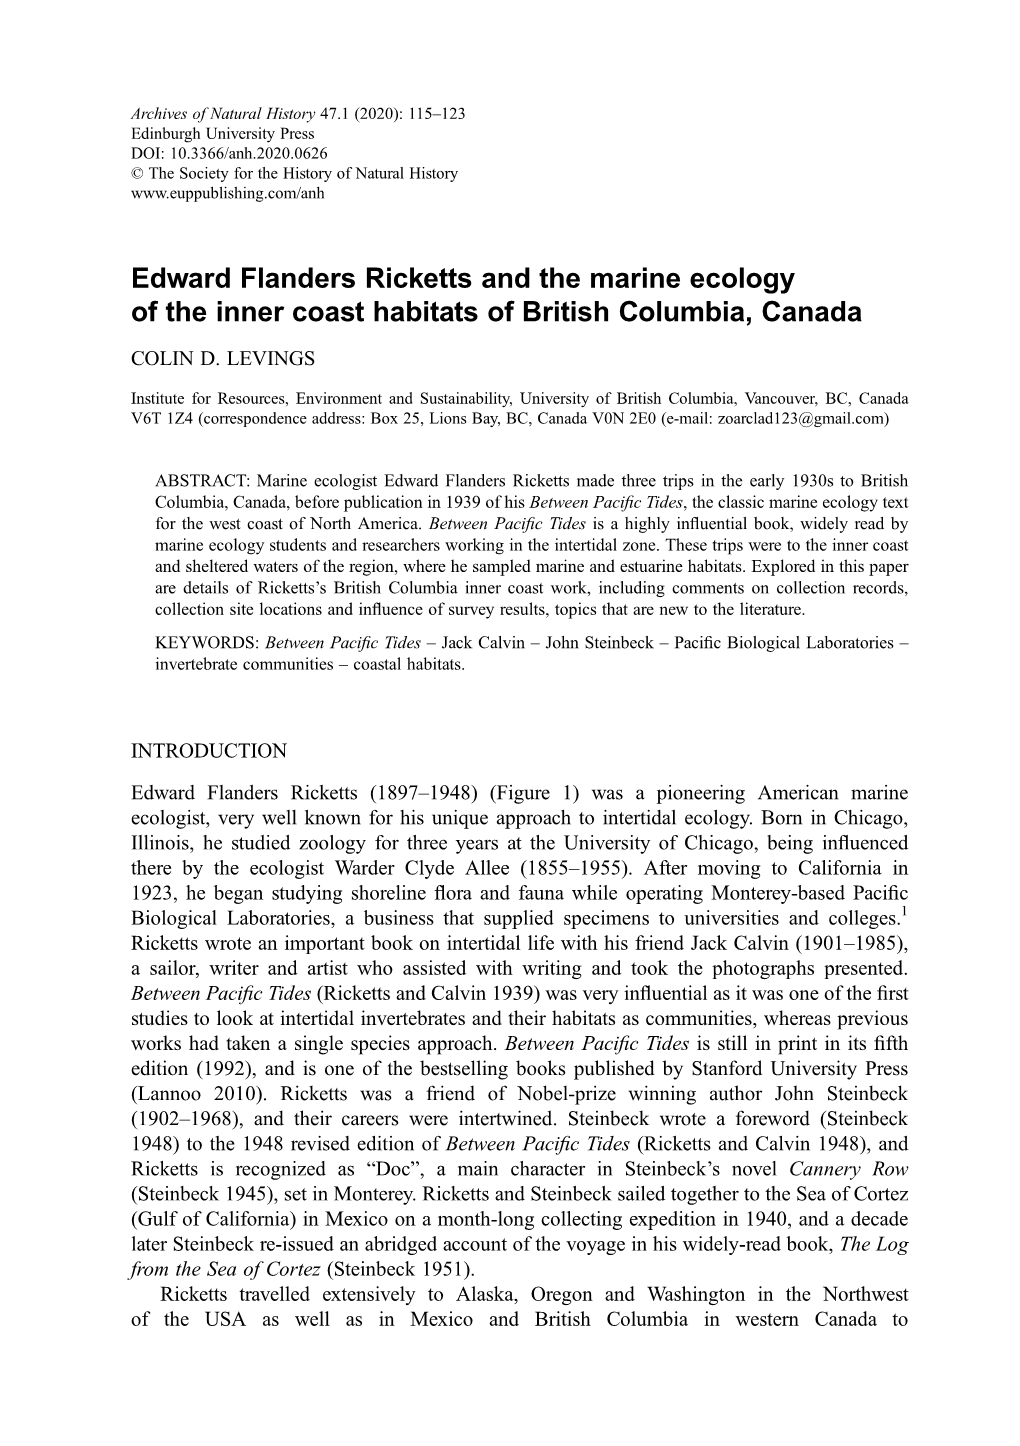 Edward Flanders Ricketts and the Marine Ecology of the Inner Coast Habitats of British Columbia, Canada